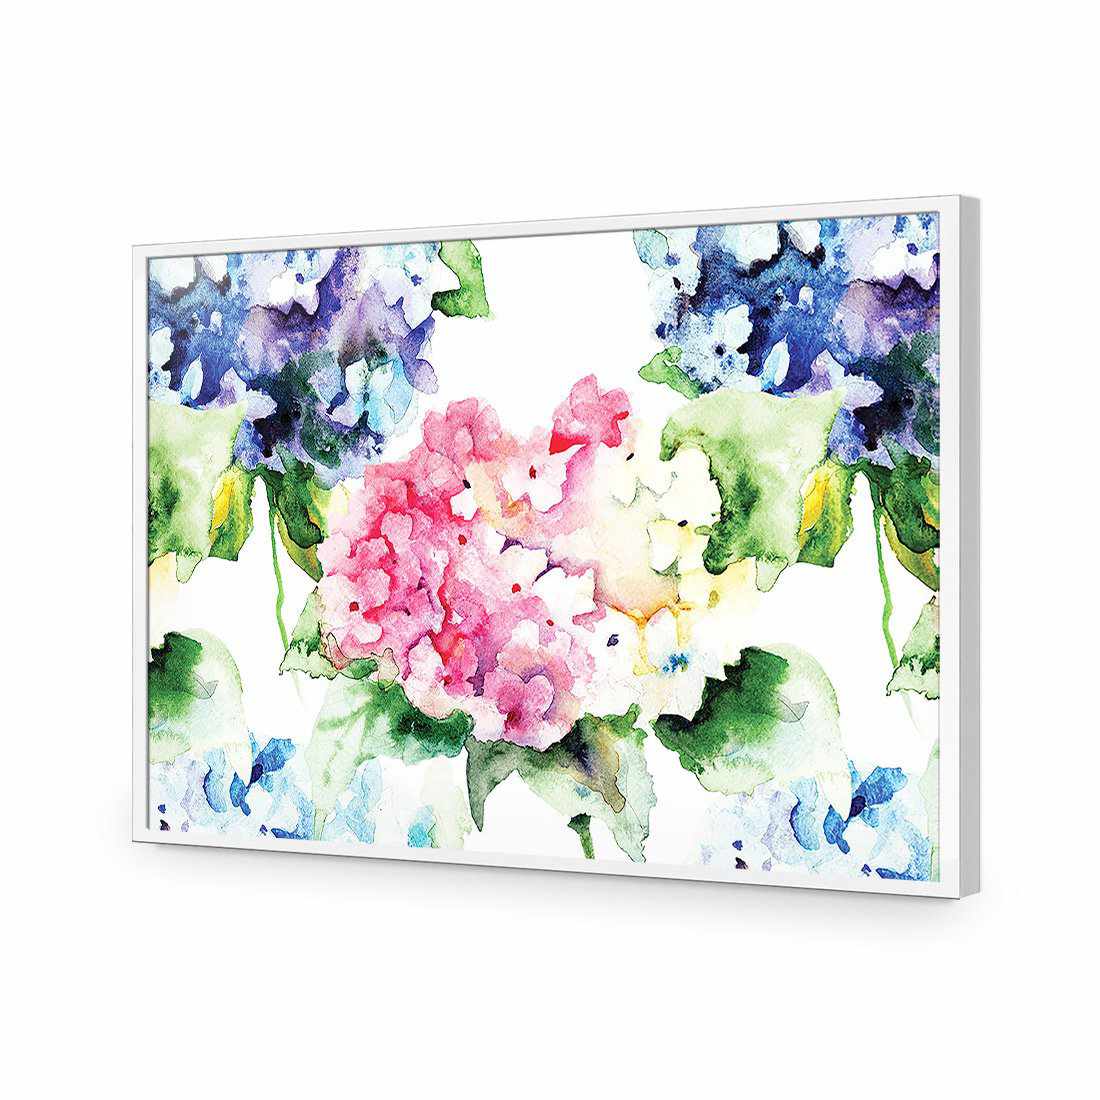 Hydrangeas-Acrylic-Wall Art Design-Without Border-Acrylic - White Frame-45x30cm-Wall Art Designs